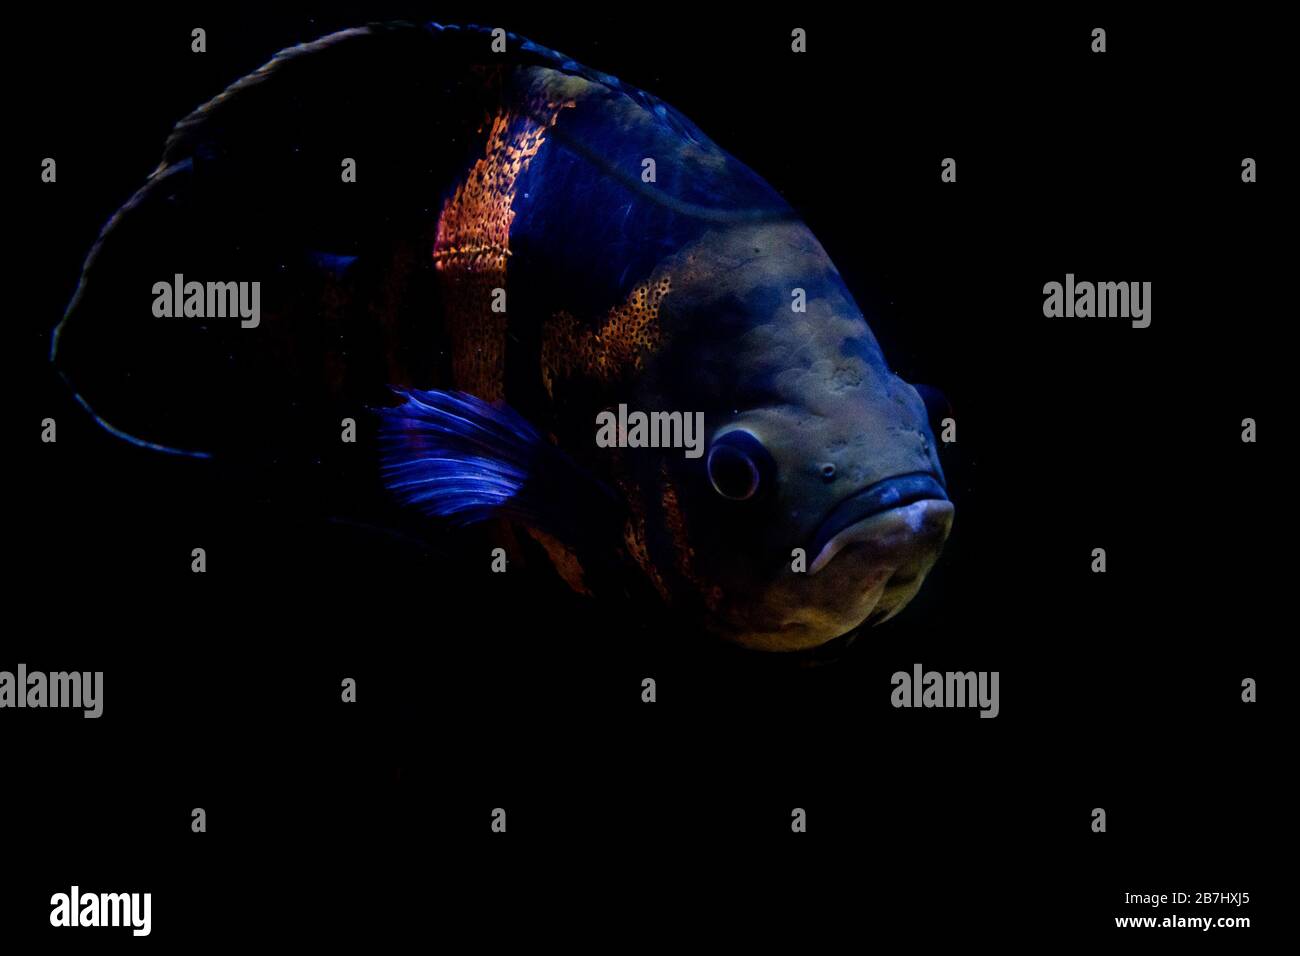 Freshwater aquarium fish, The oscar (Astronotus ocellatus) Stock Photo